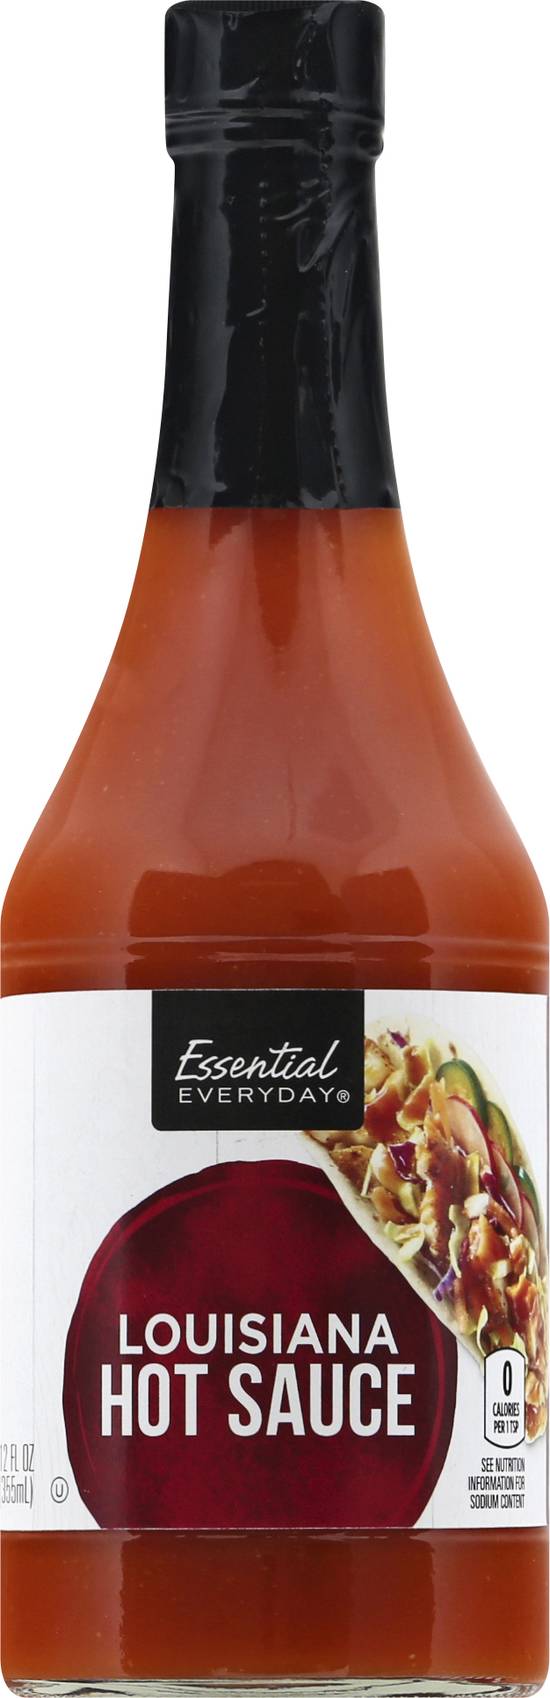 Essential Everyday Louisiana Hot Sauce 12 oz, Hot Sauce